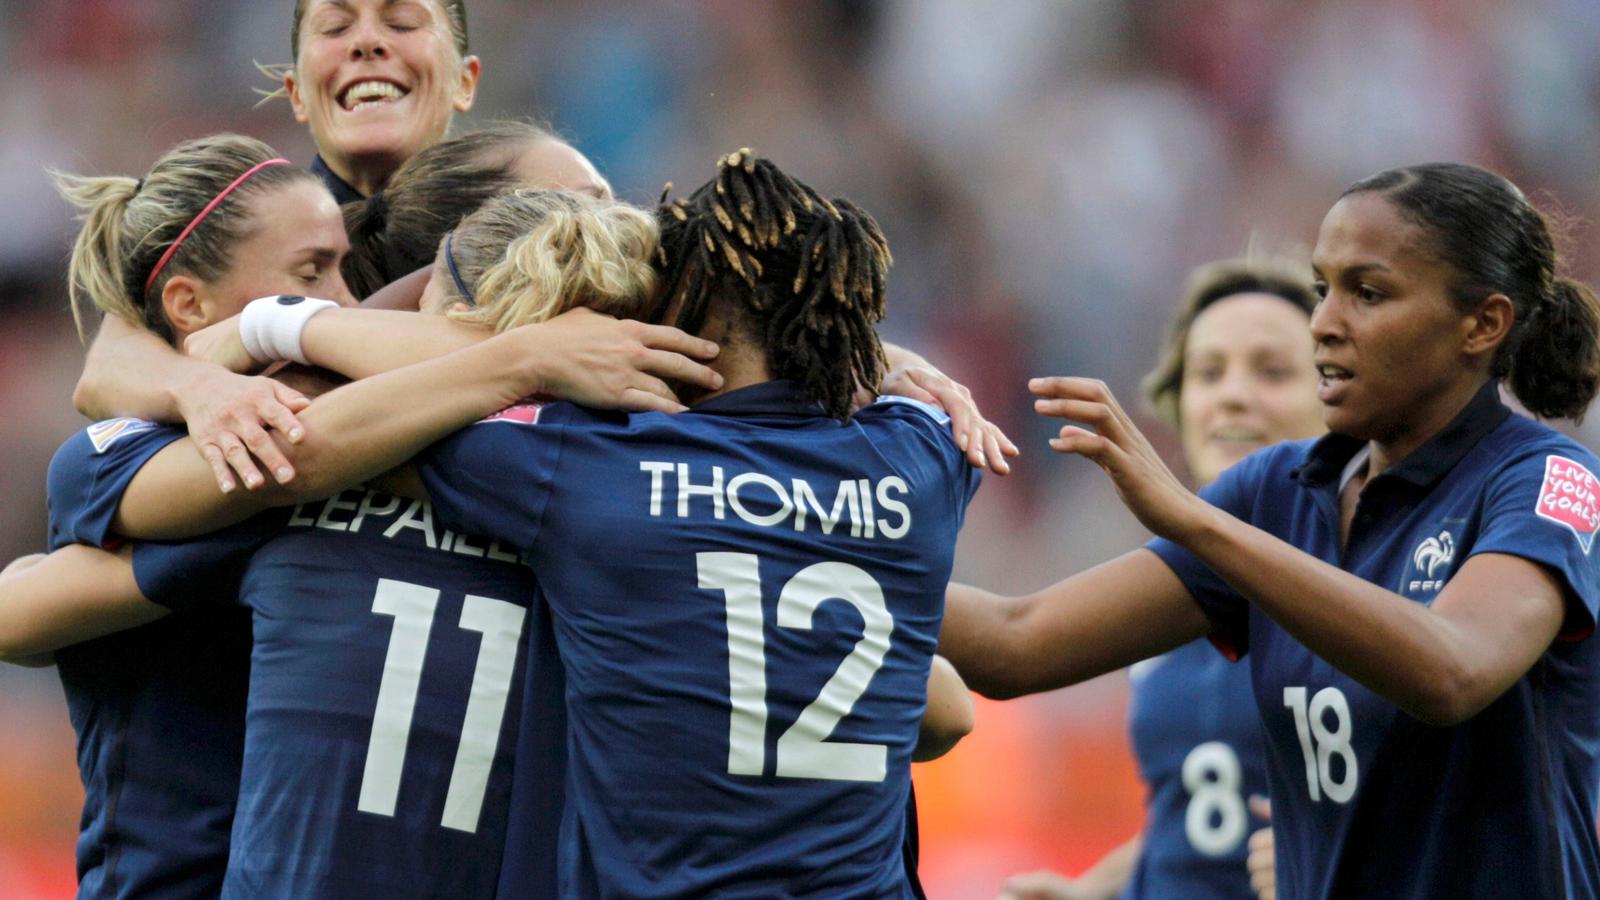 Mondial féminin de football - France vs Angleterre en direct sur Eurosport dès 19h